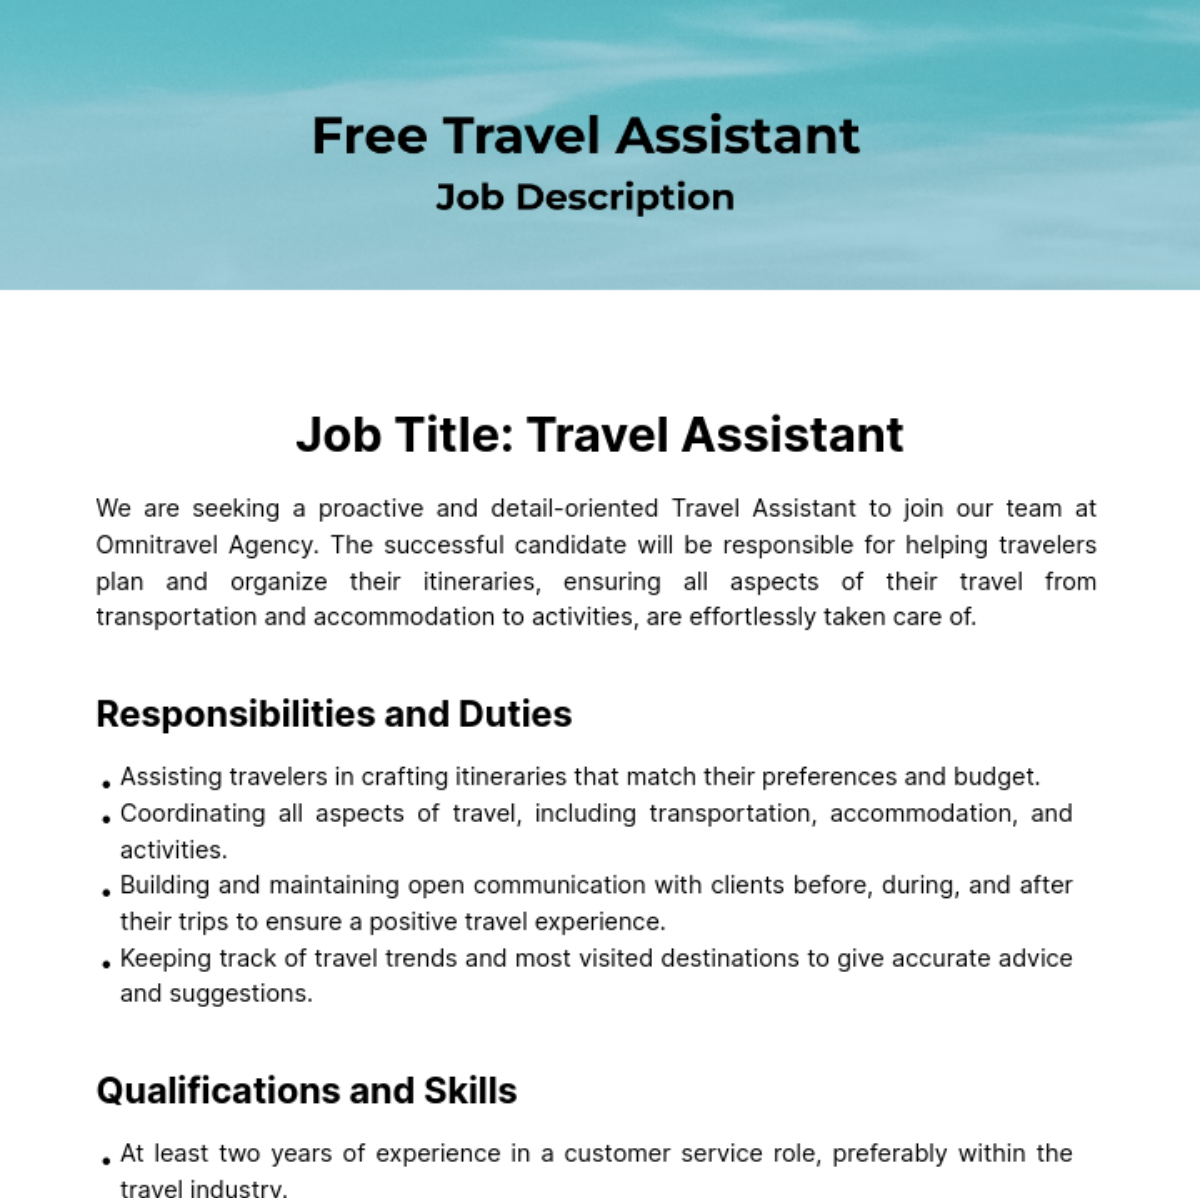 Travel Assistant Job Description Template